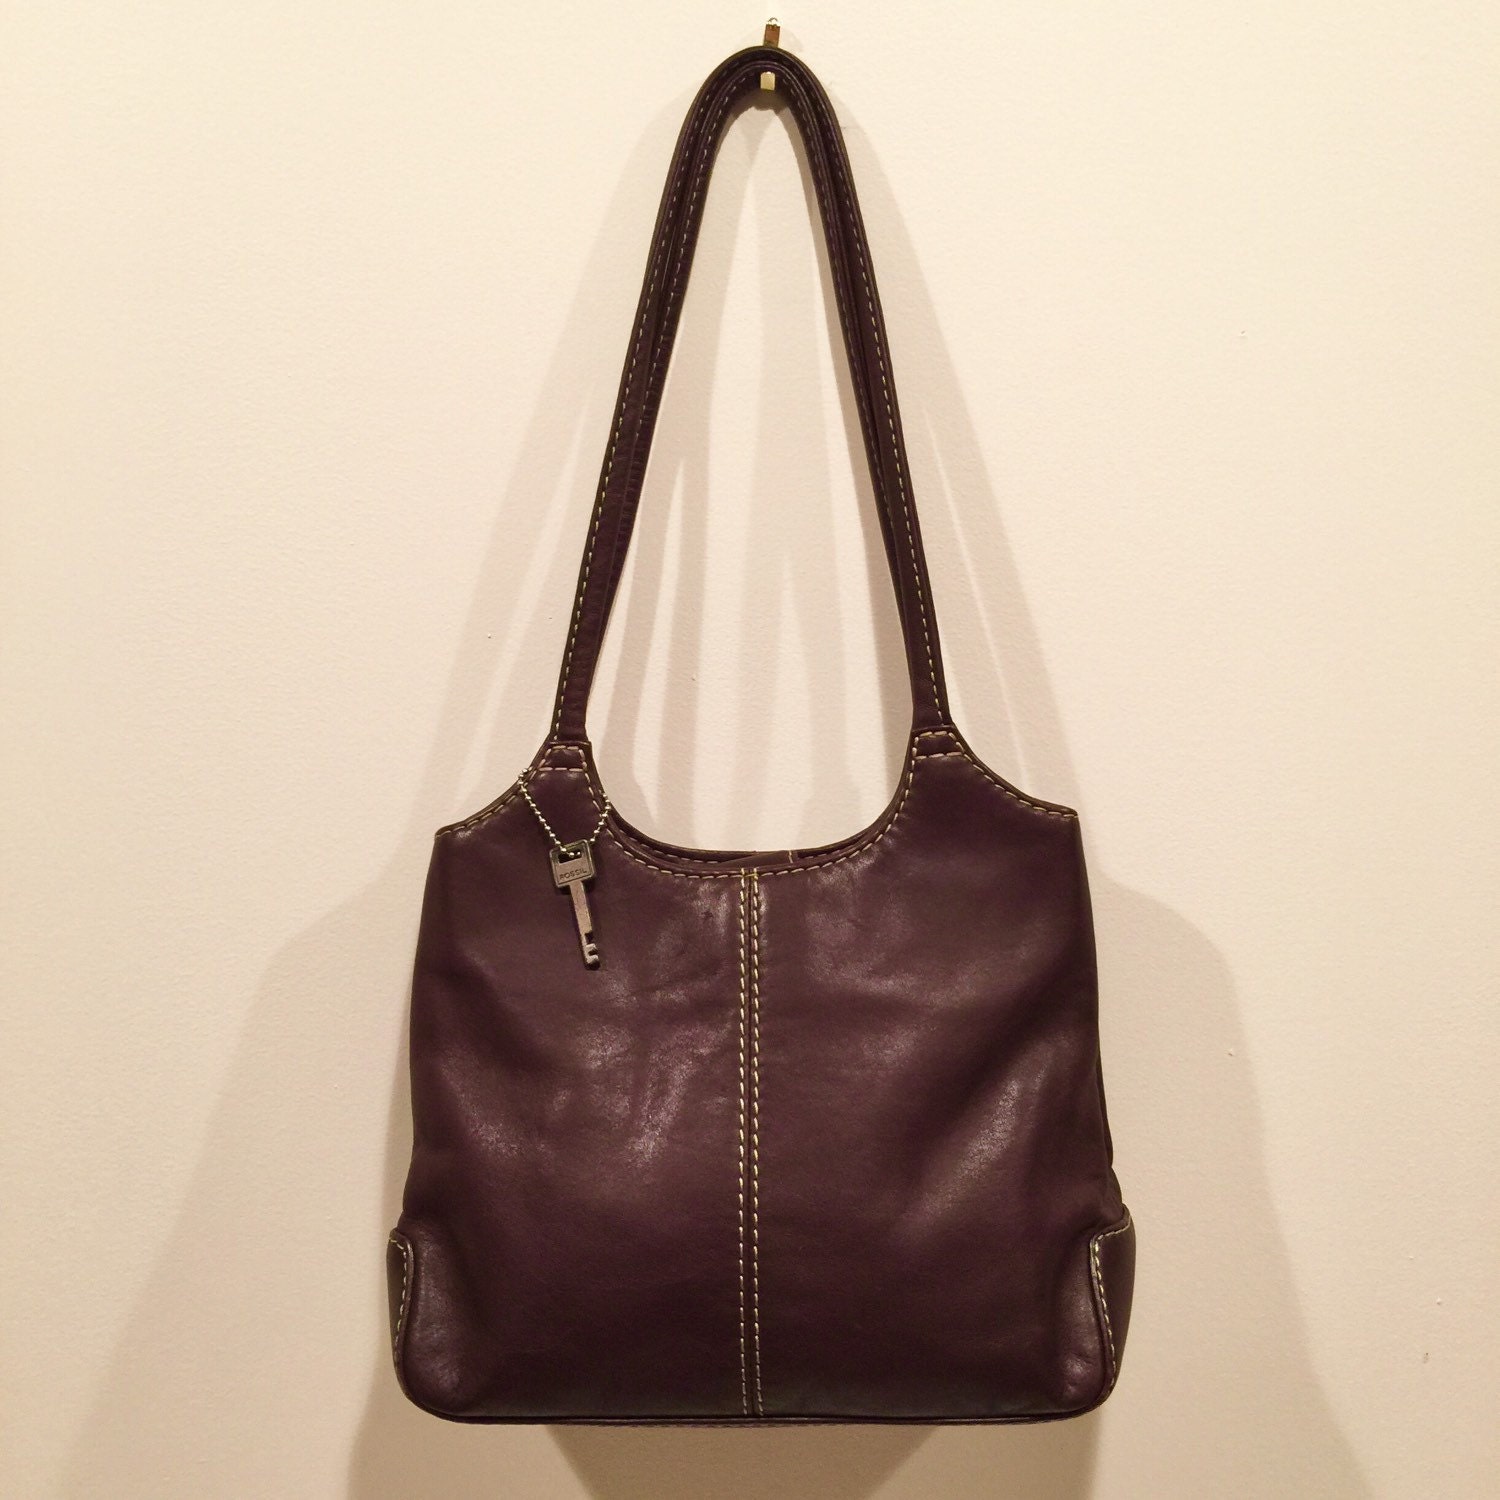 Fossil handbag dark brown soft pebbled leather vintage purse